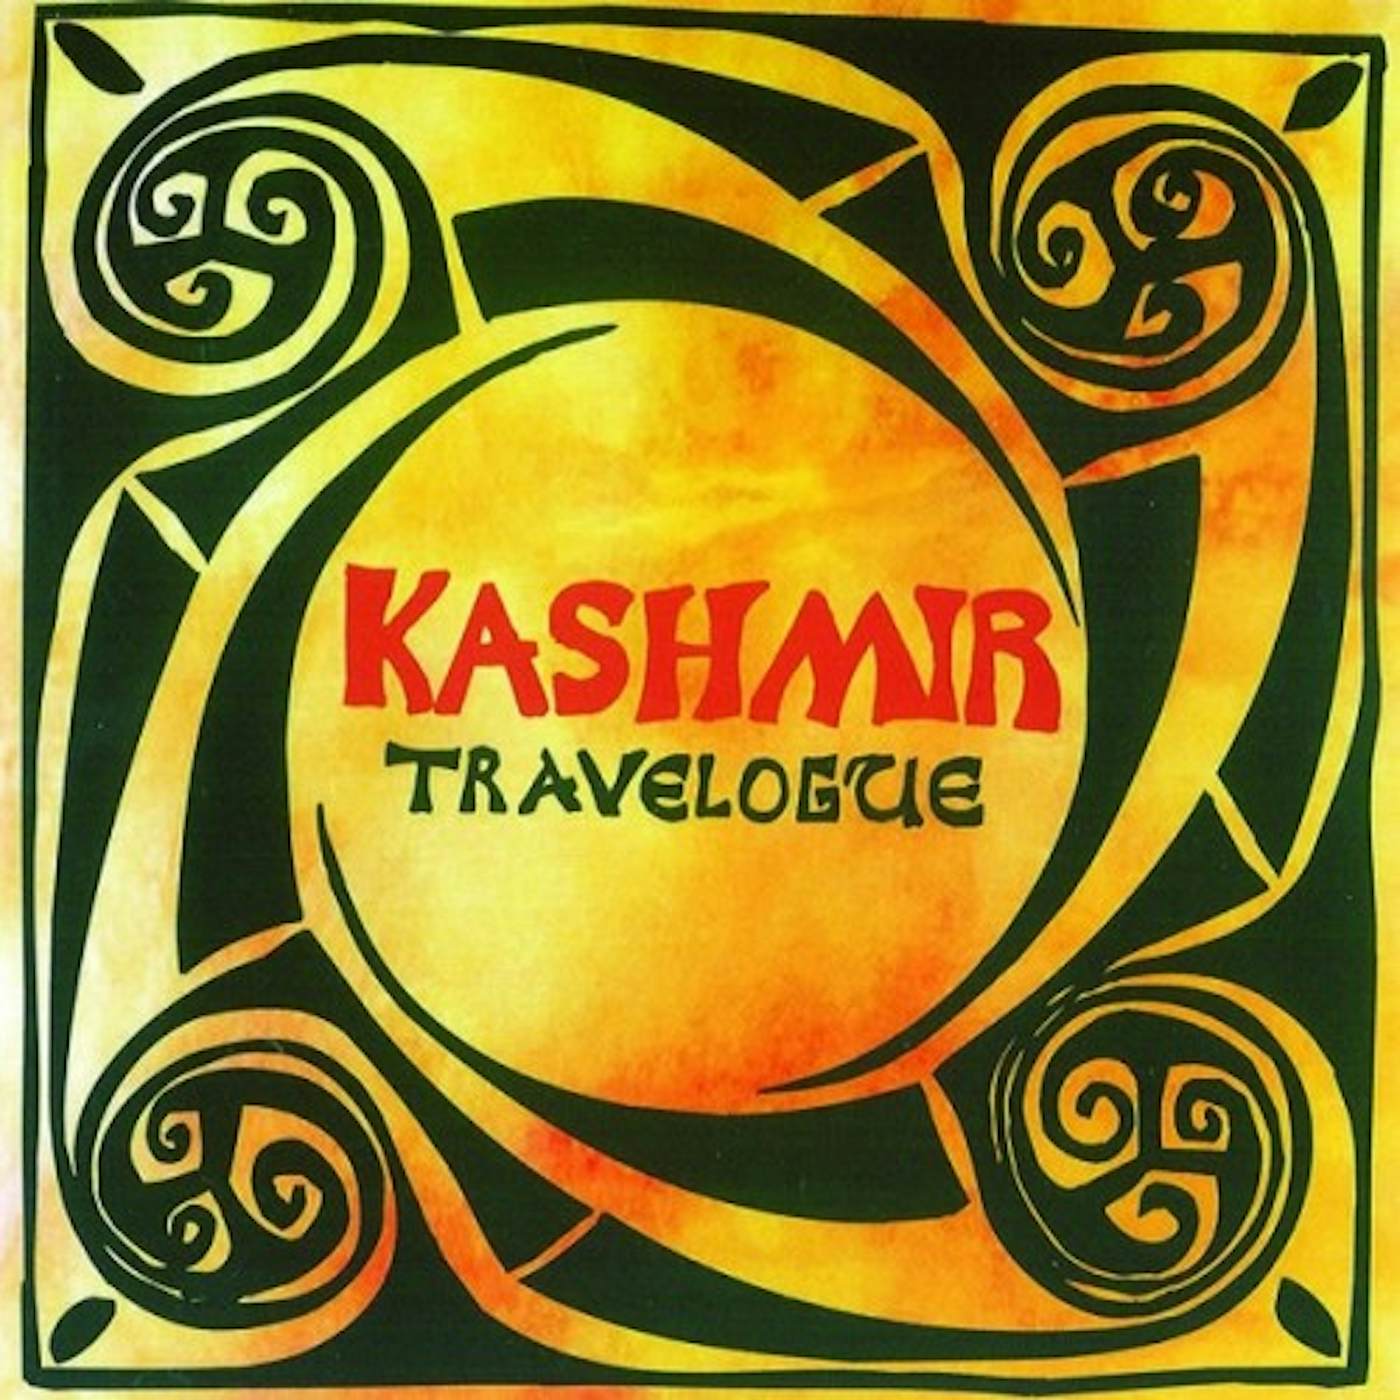 Kashmir Travelogue Record